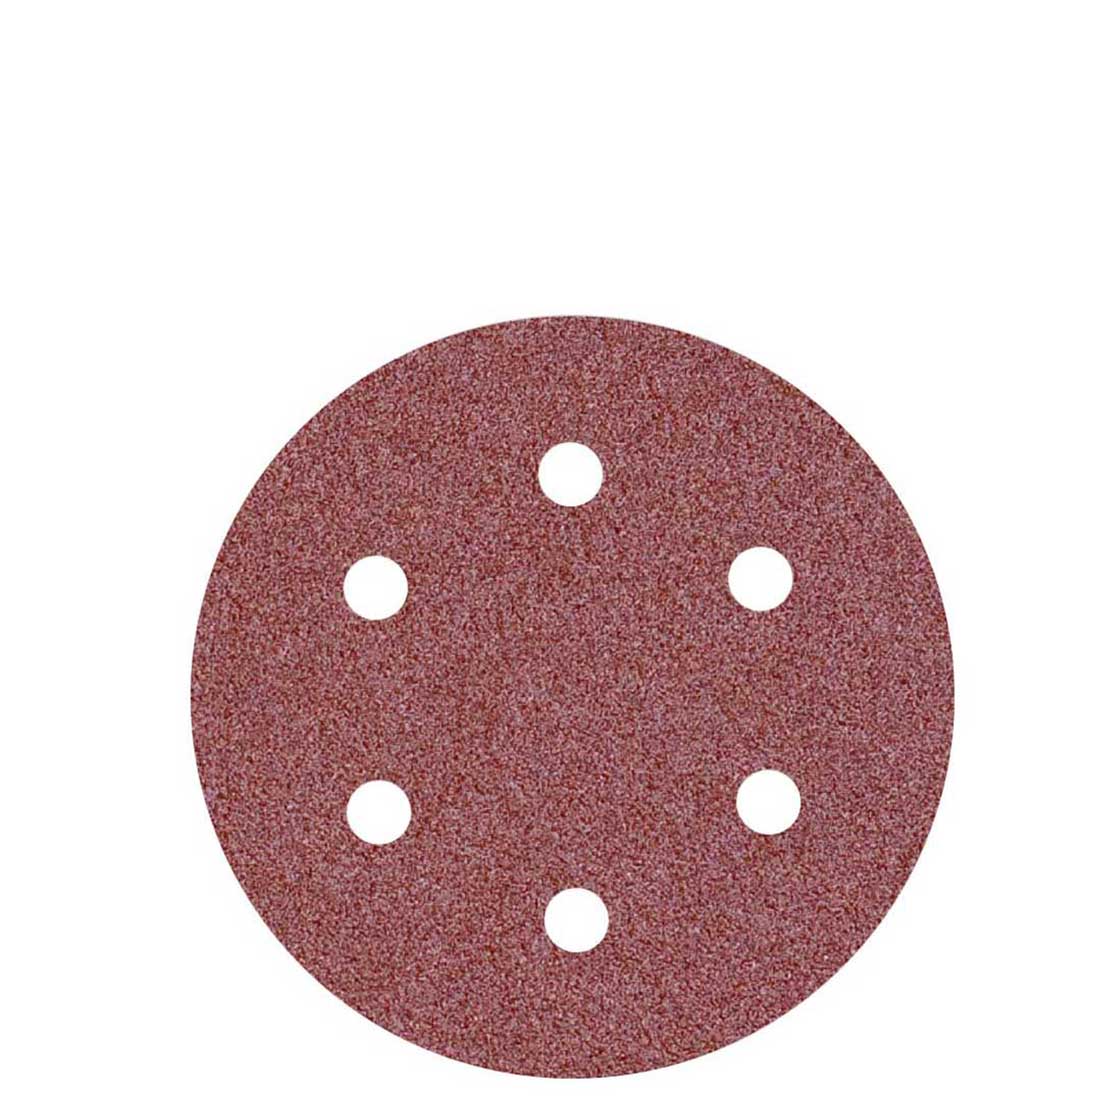 MioTools hook & loop sanding discs for drywall sanders, G16–240, Ø 225 mm / 6 hole / aluminium oxide